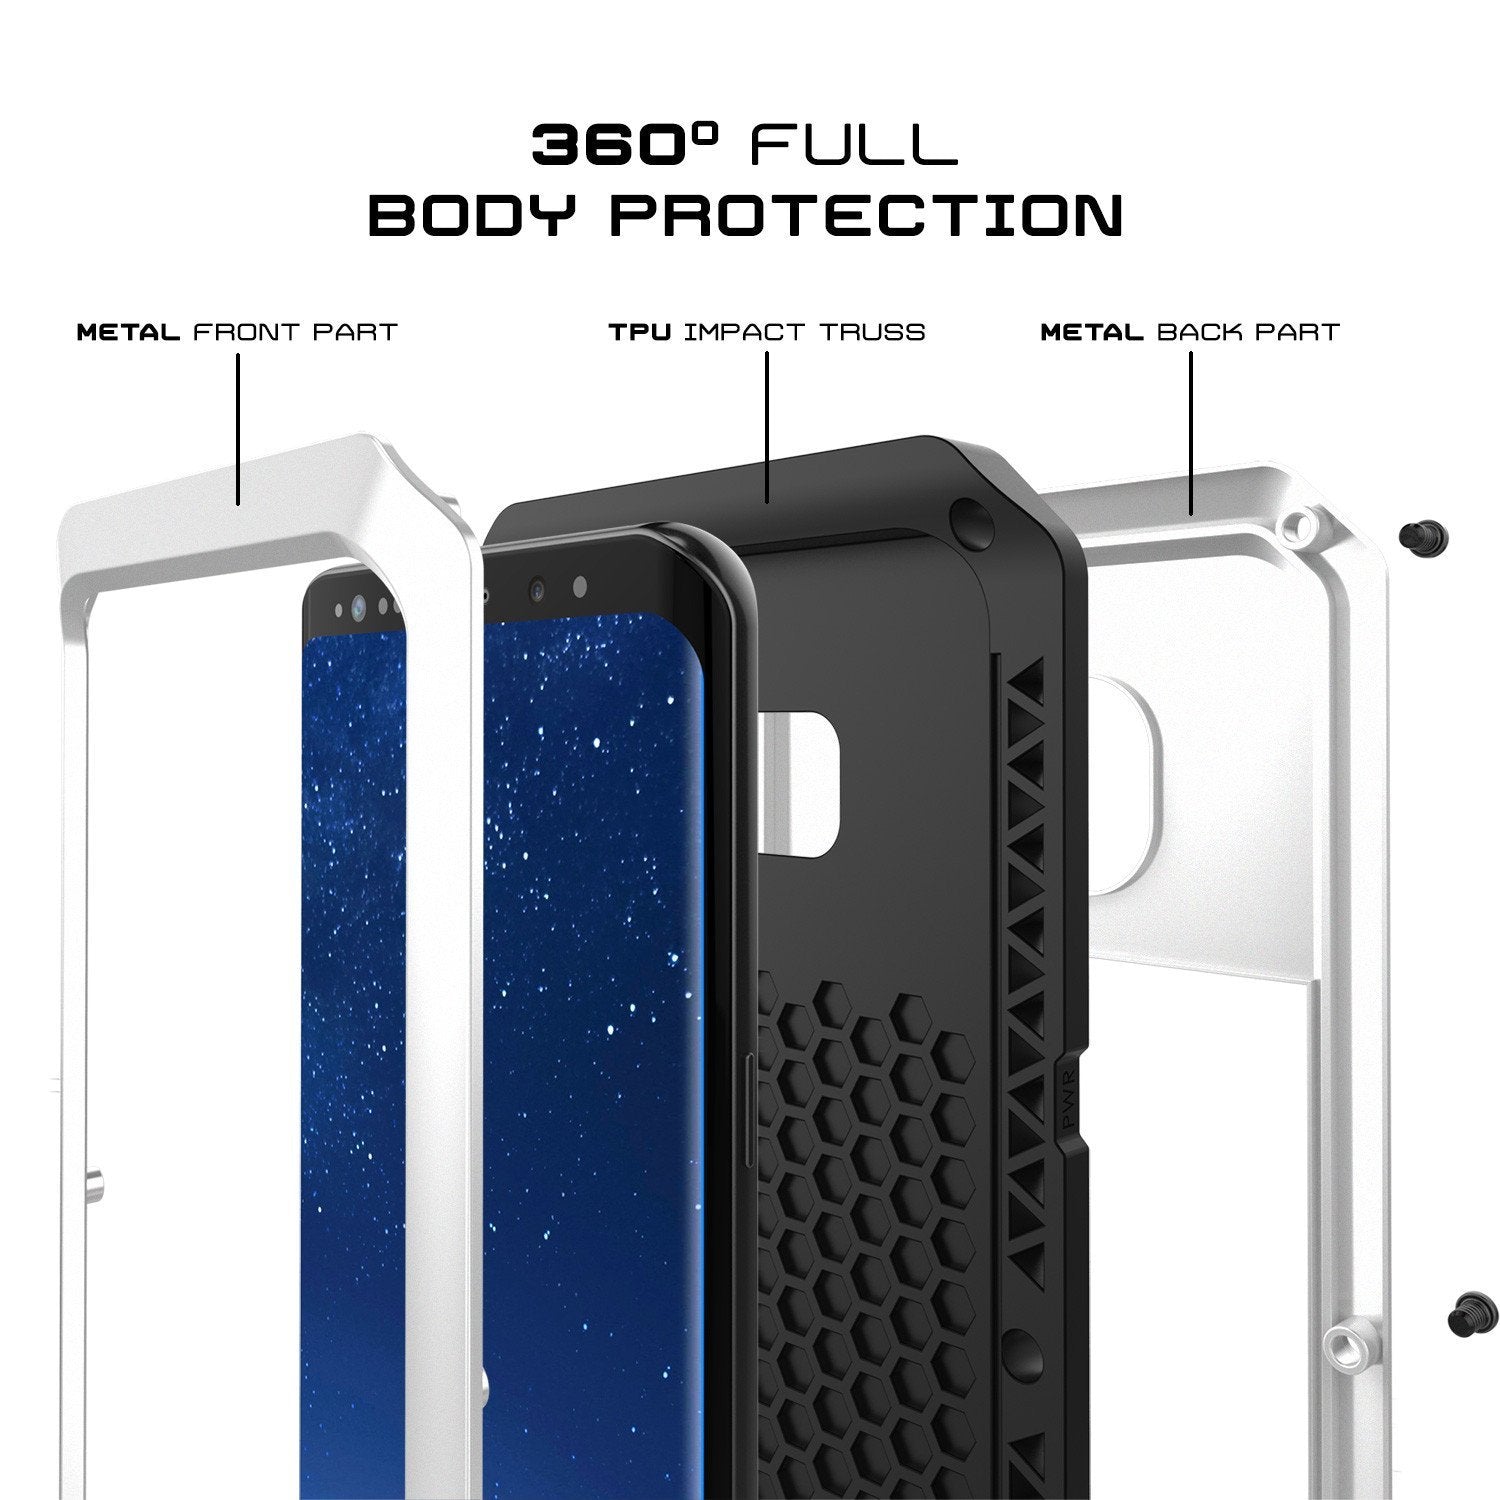 Galaxy Note 8  Case, PUNKcase Metallic White Shockproof  Slim Metal Armor Case